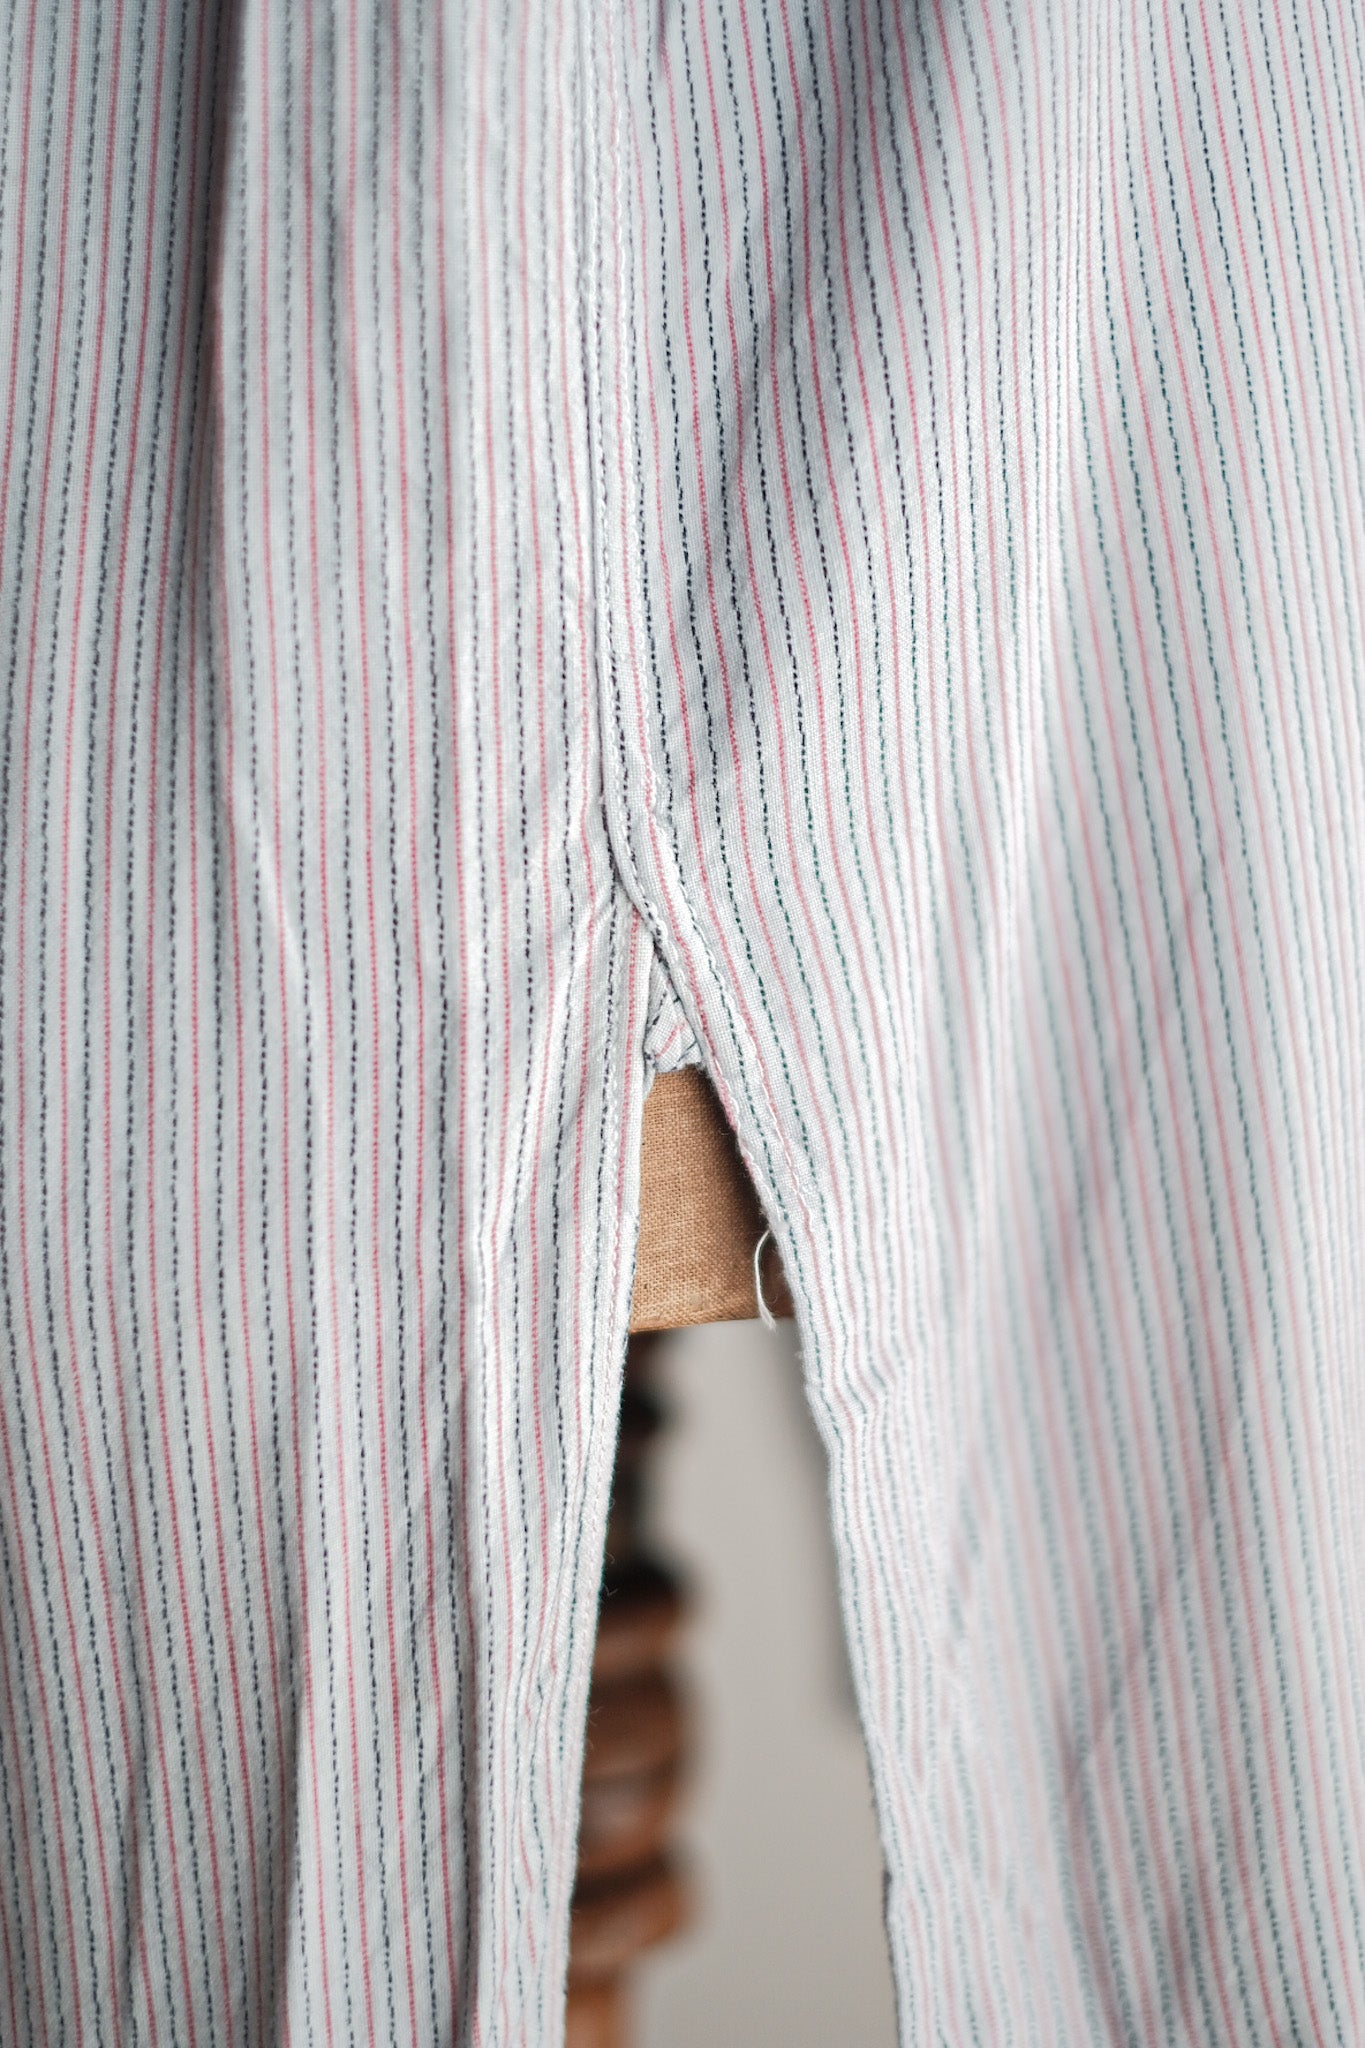 [~ 40's] French Vintage Rayon Grandpa Shirt